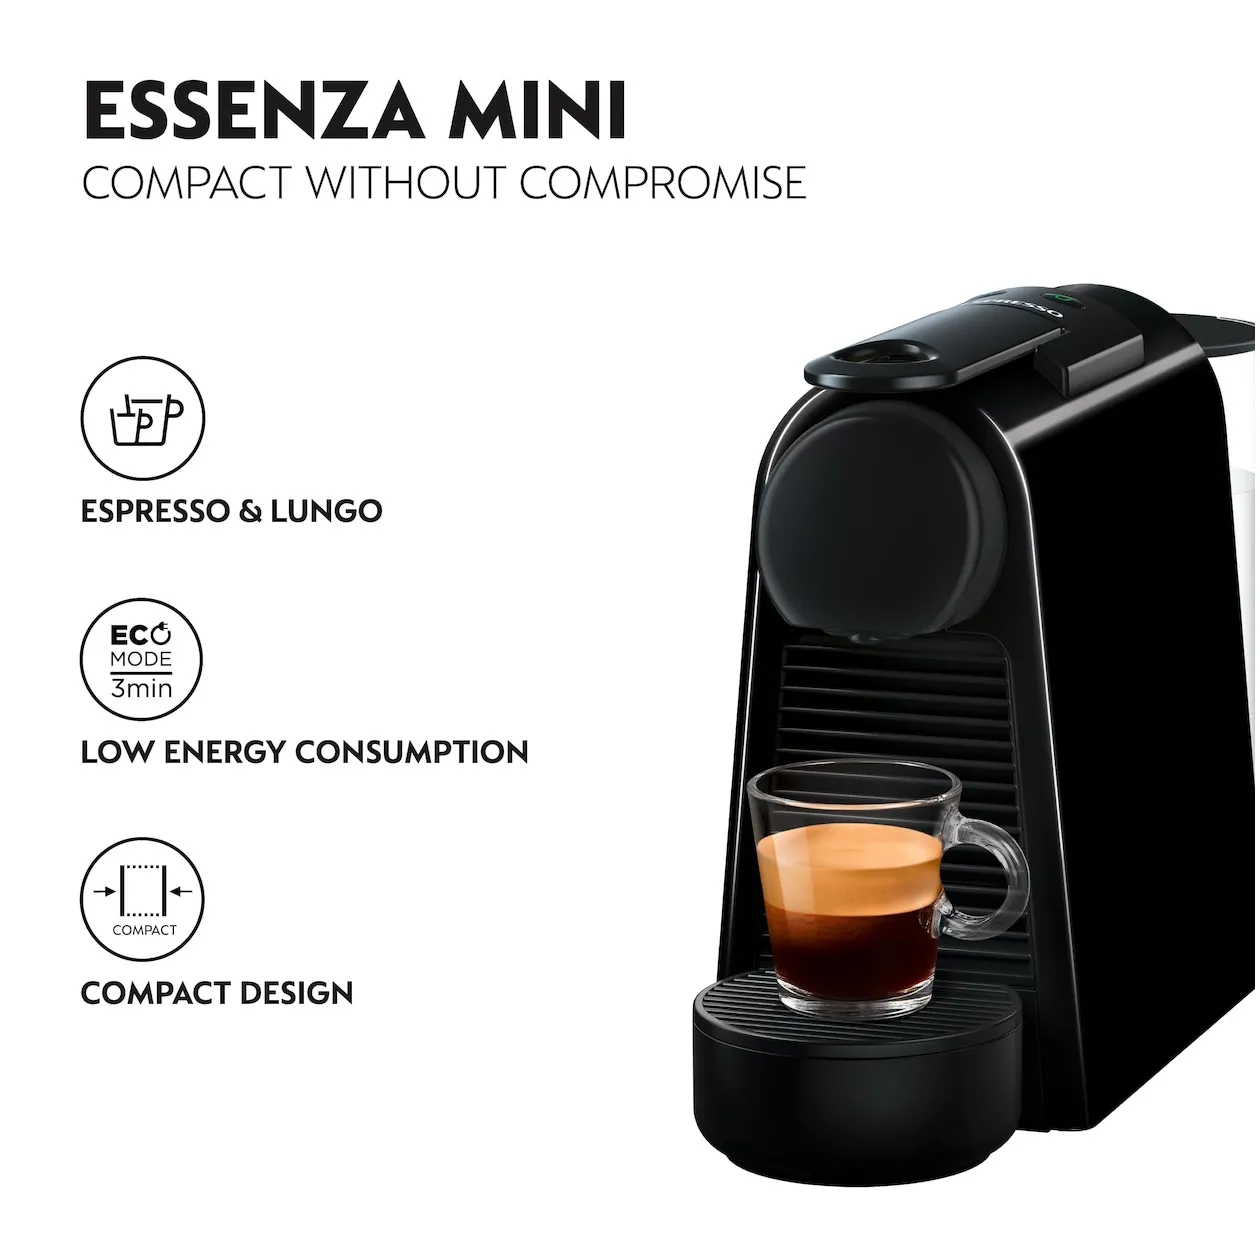 Magimix Nespresso Essenza Mini M115 11368NL Zwart